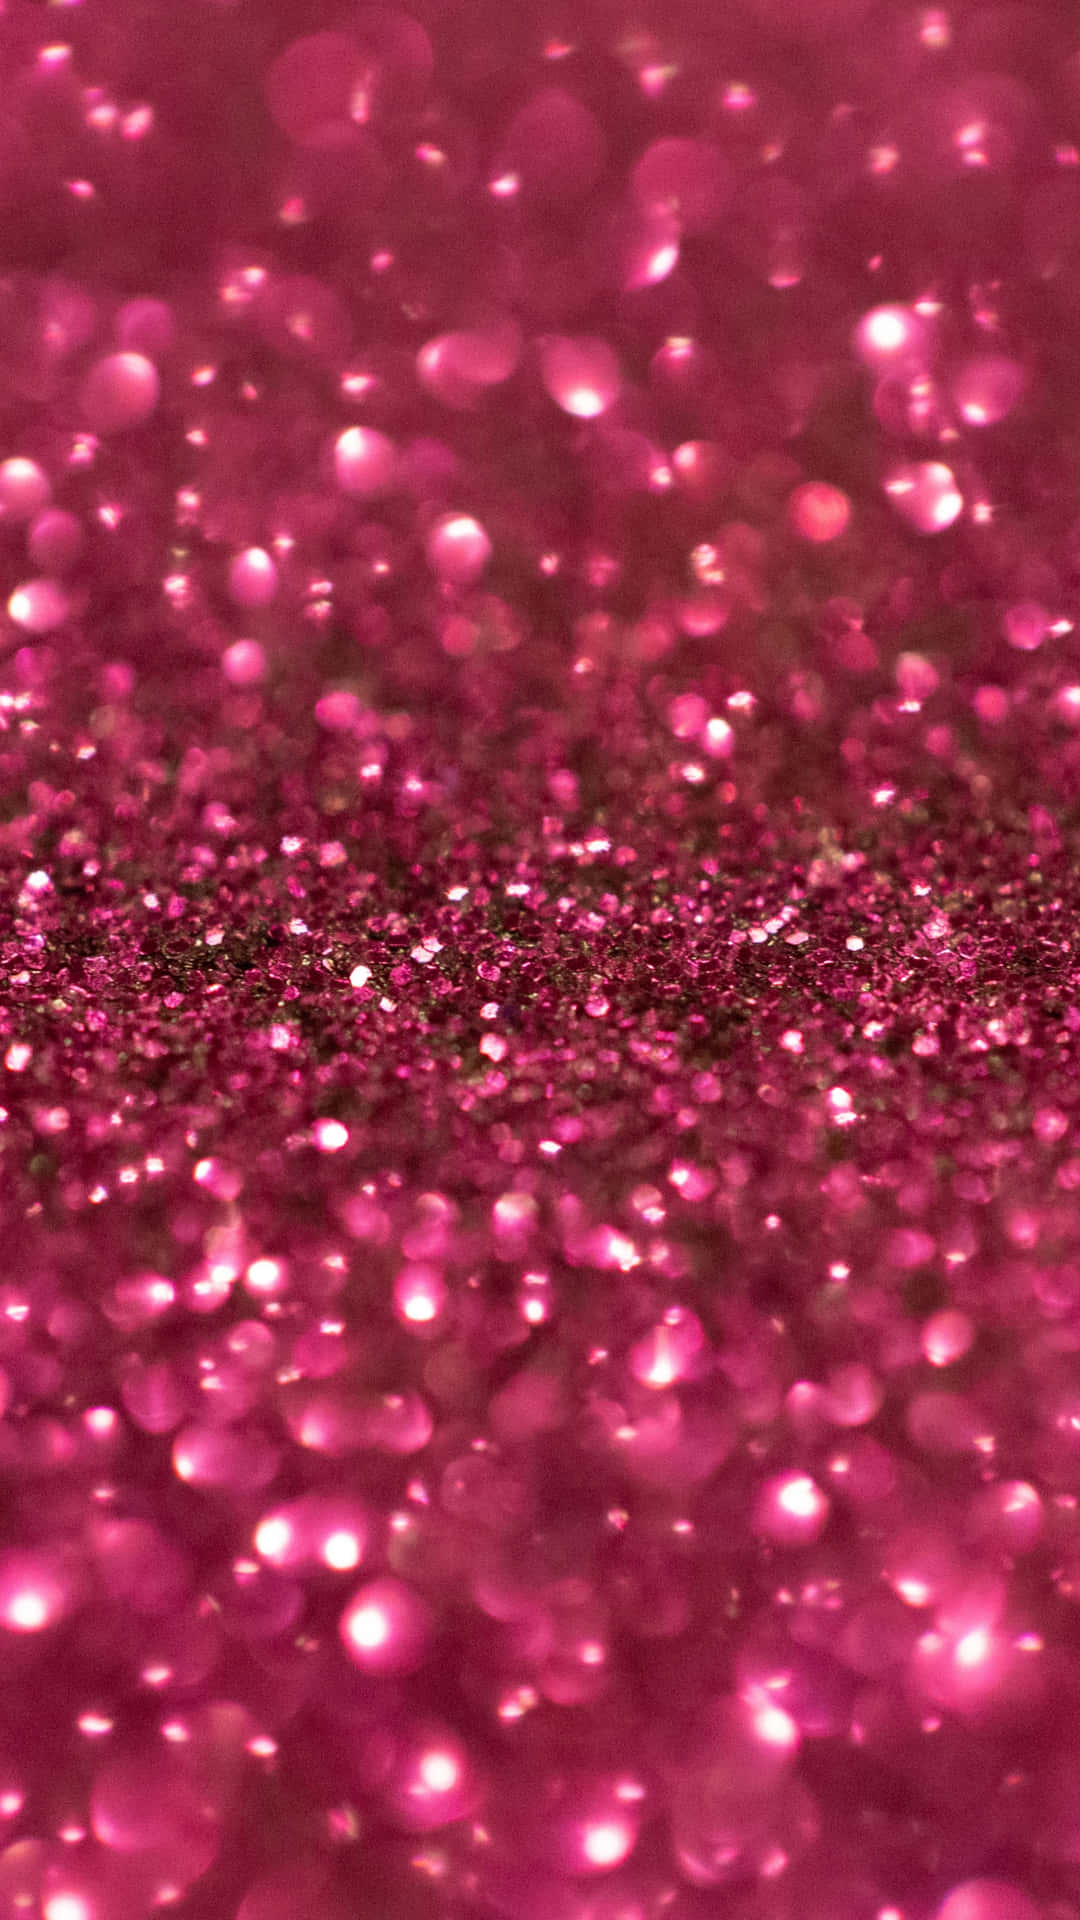 Caption: Enchanting Pink Glitter Background